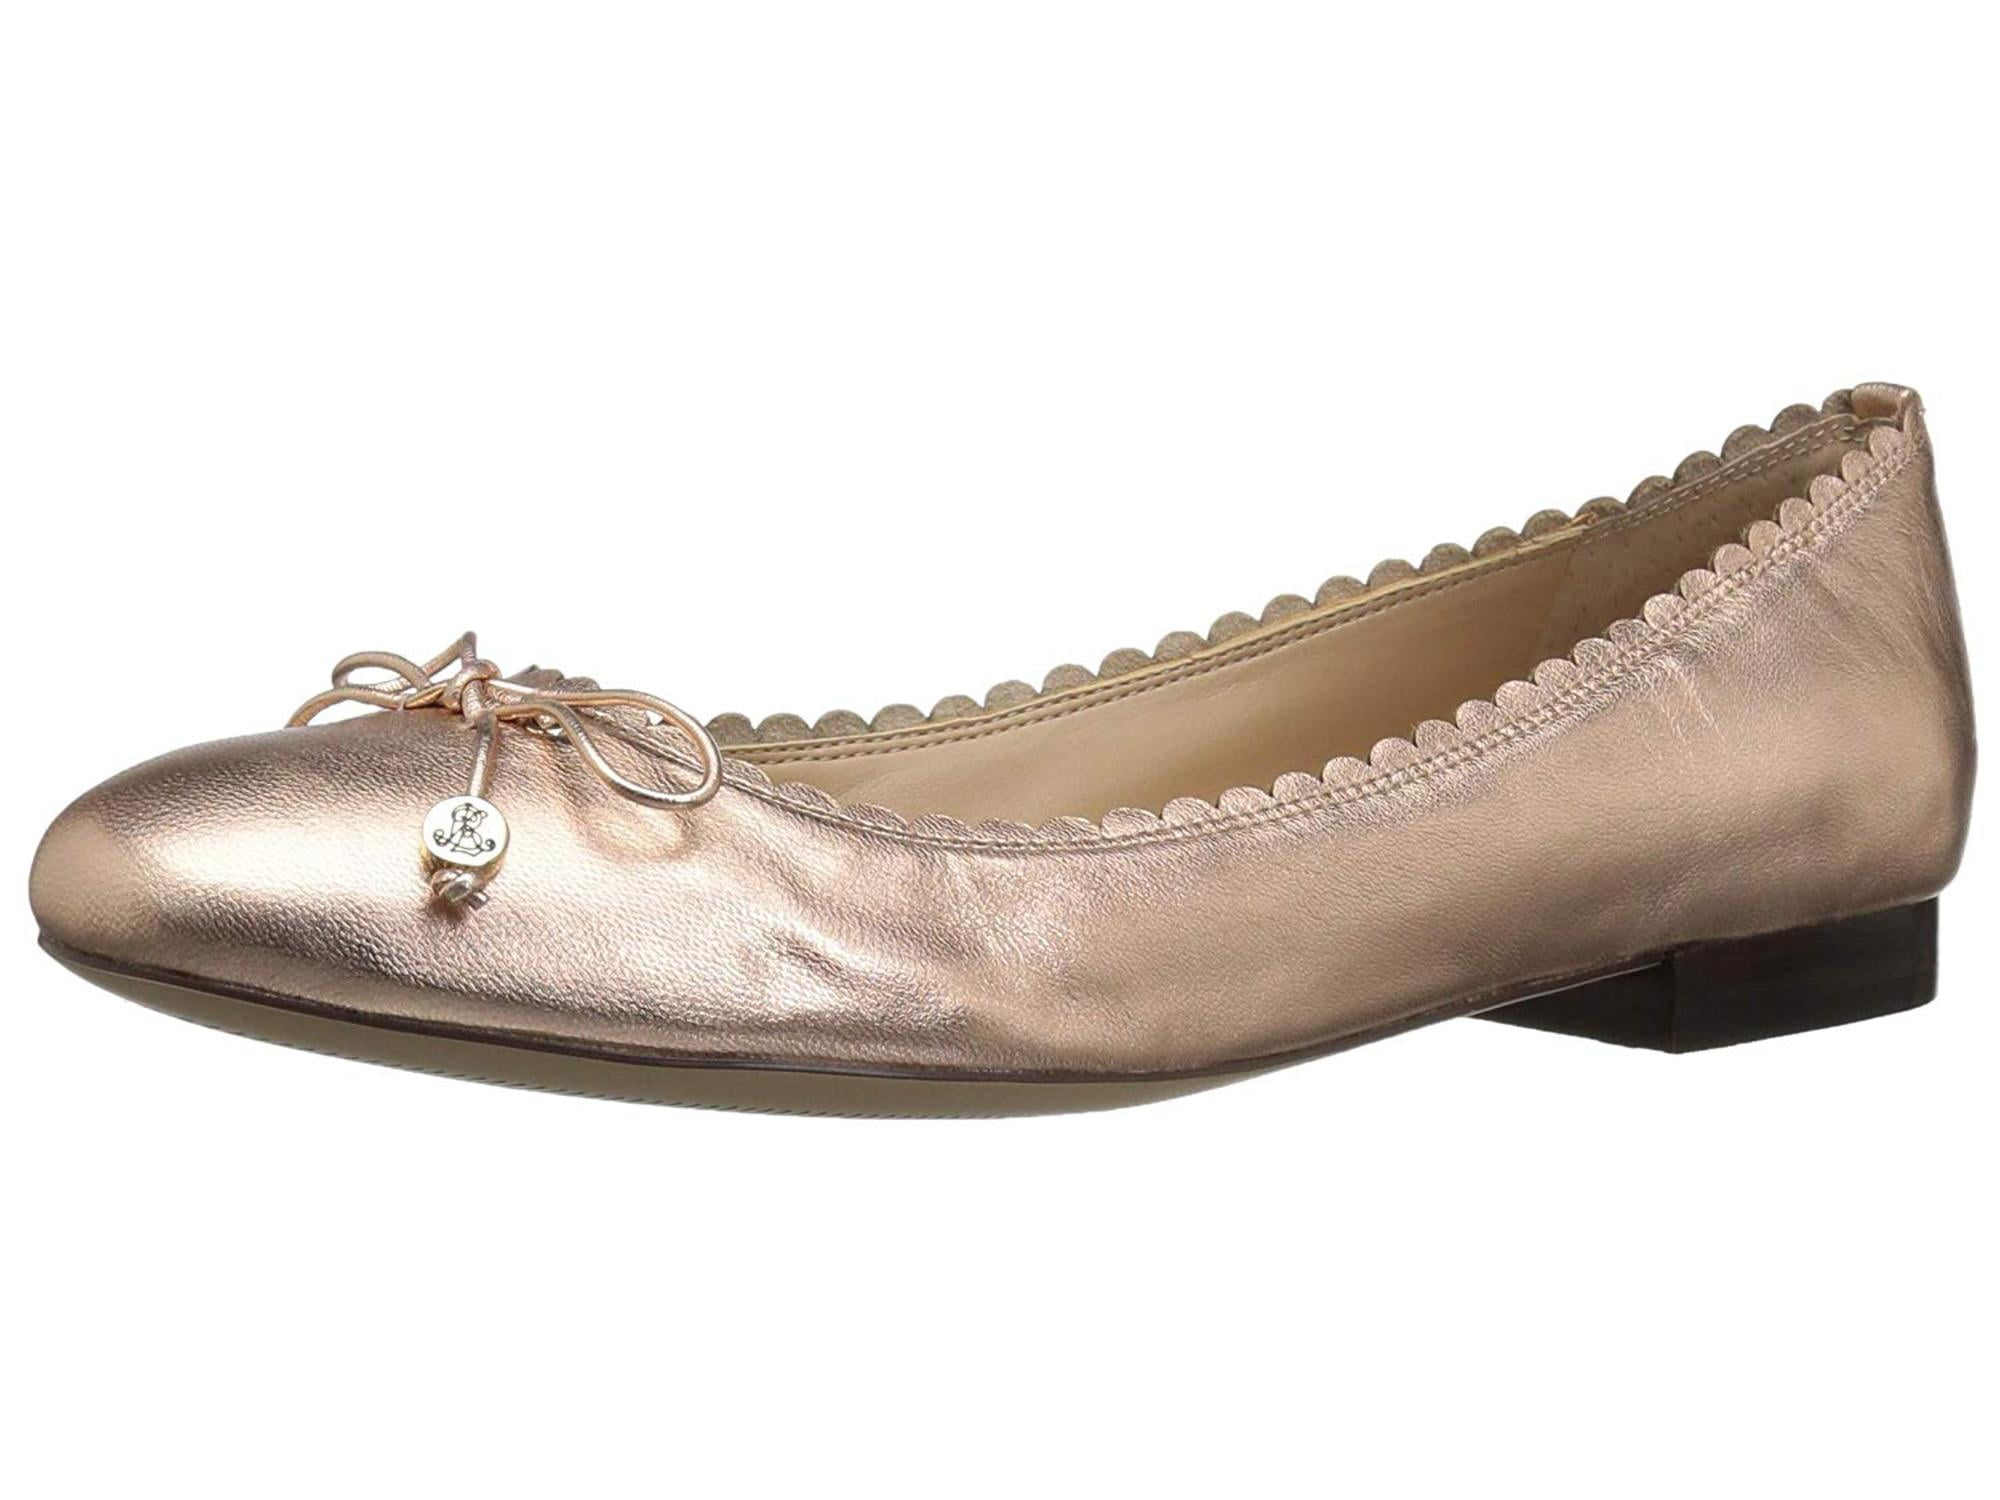 Lauren Ralph Lauren - Women's Glennie Ballet Flat, Pink, Size 9.0 ...